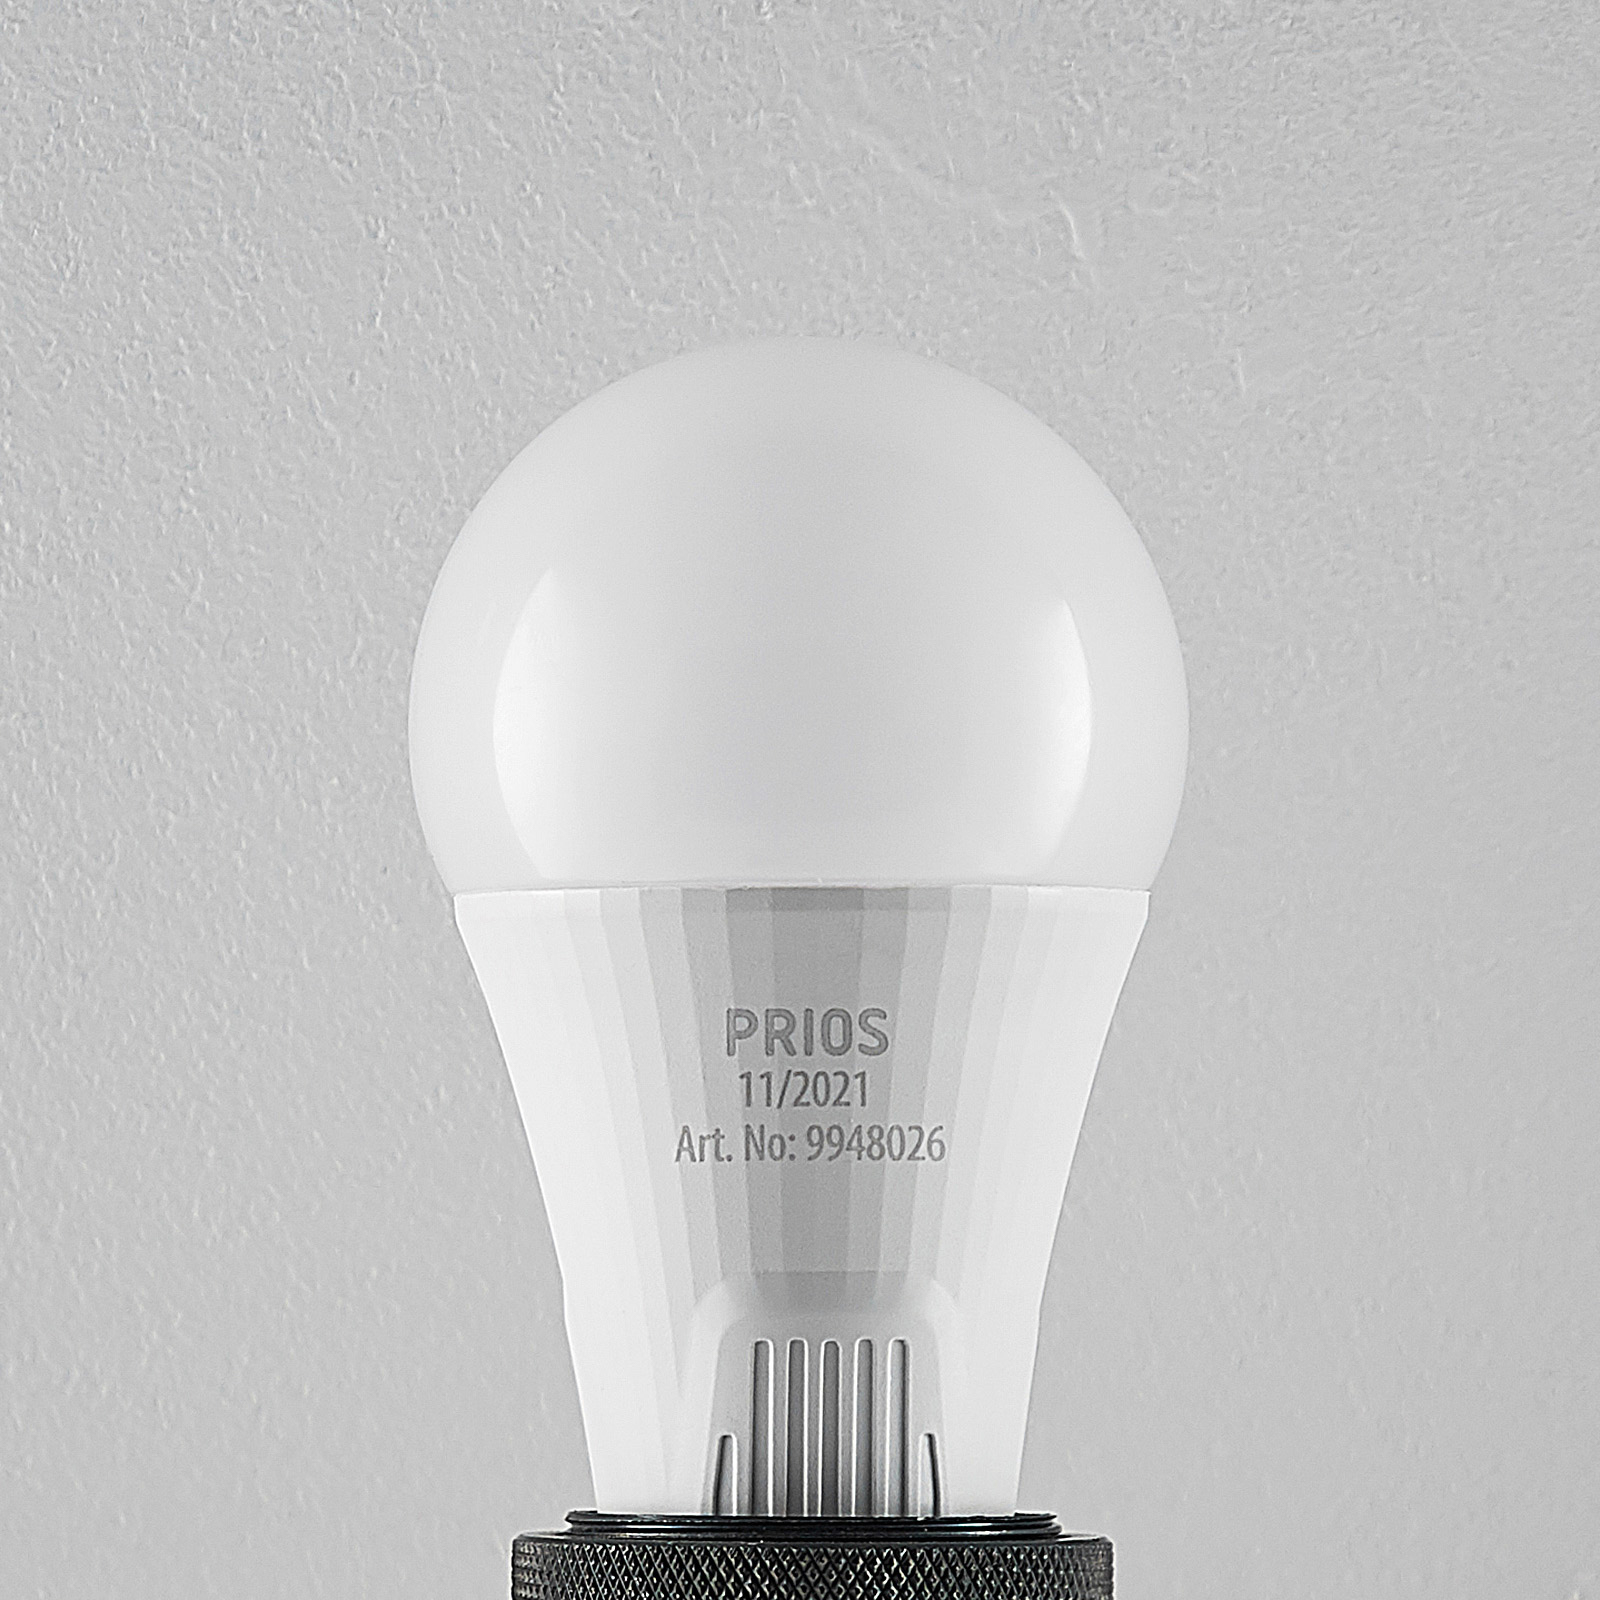 LED-Lampe E27 A65 15W weiß 3.000K